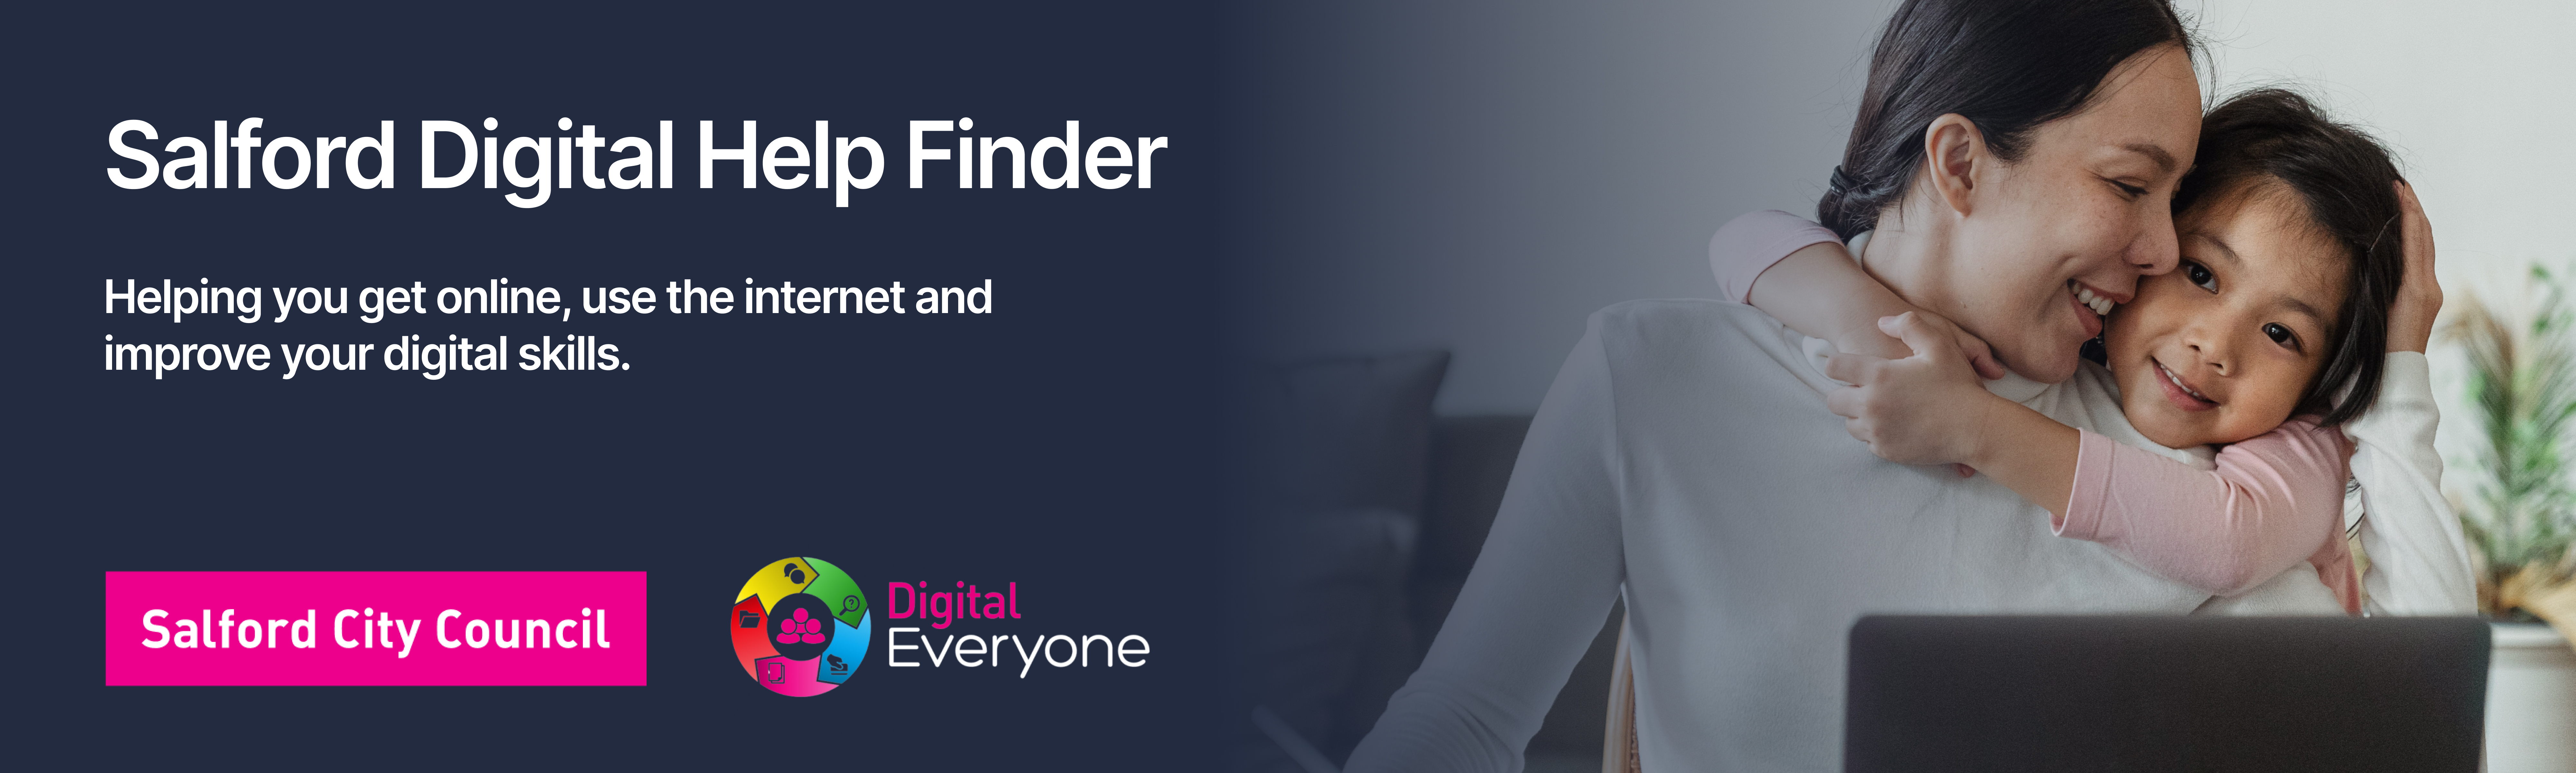 Salford Digital Help Finder, helping you get online, use the internet and improve your digital skills